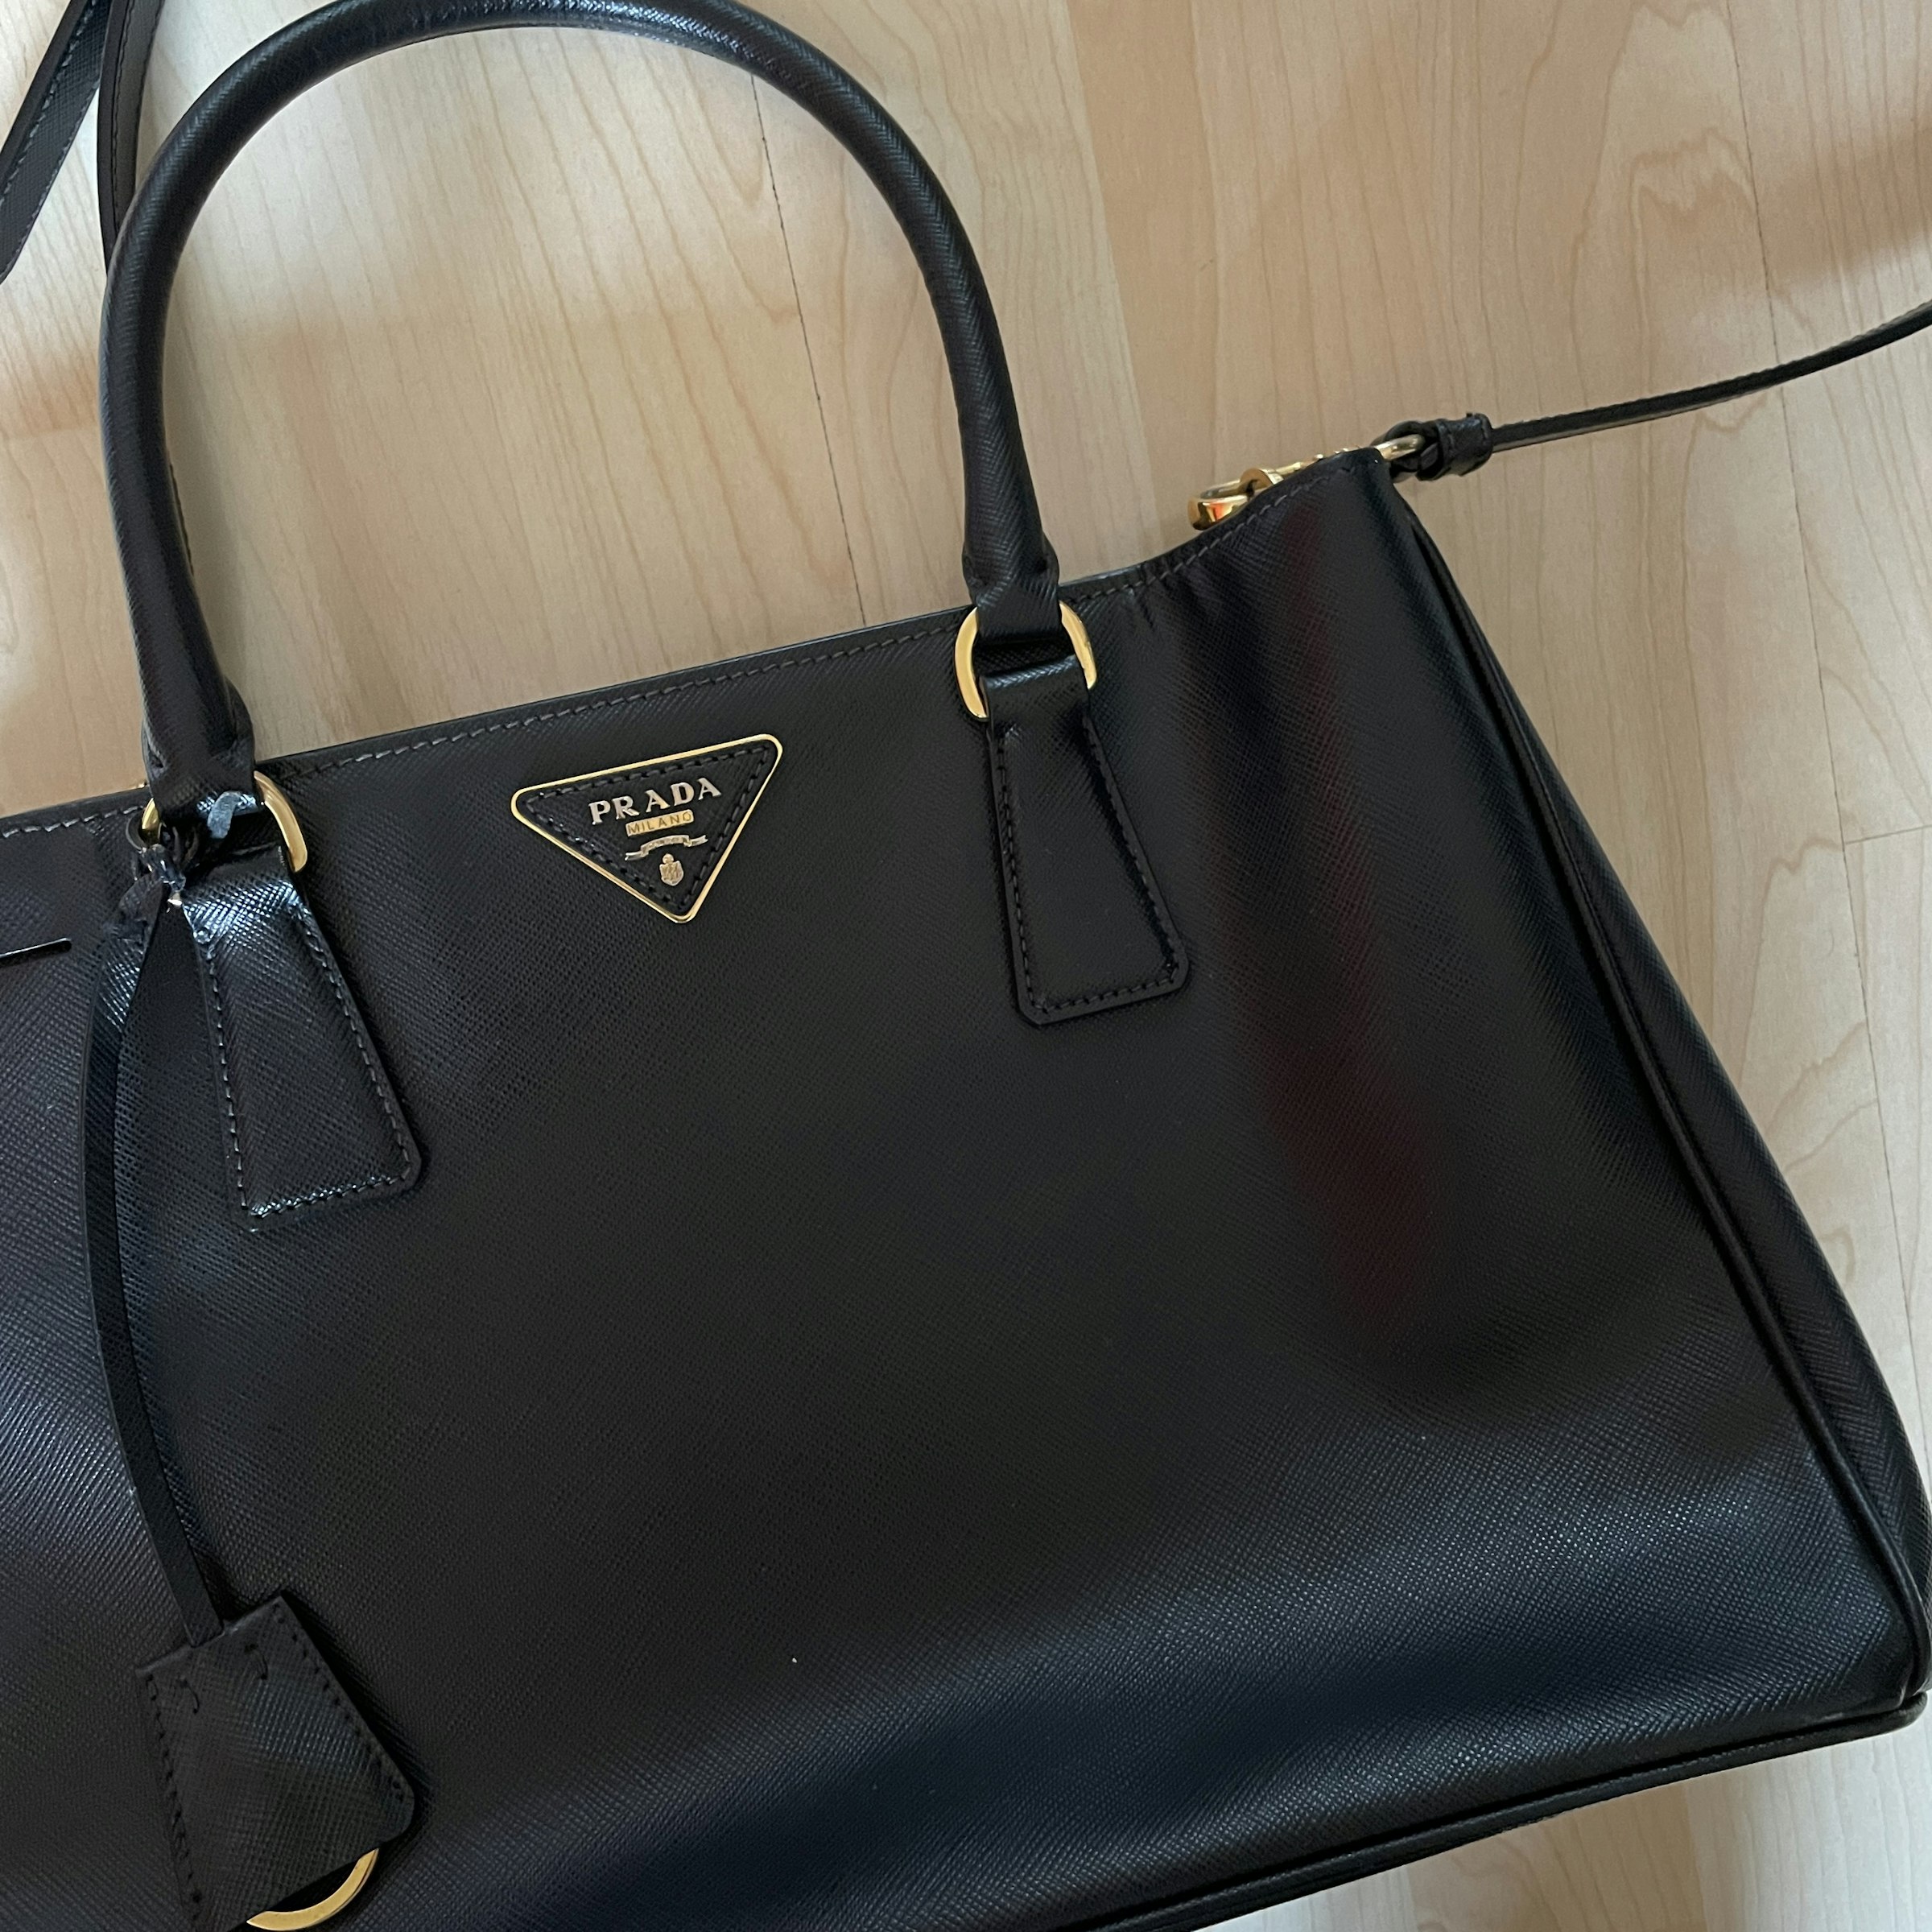 Grabar fácilmente Microordenador Bolsa Prada Galleria Saffiano Leather Bag en negro - $10,000.00 | Gloset